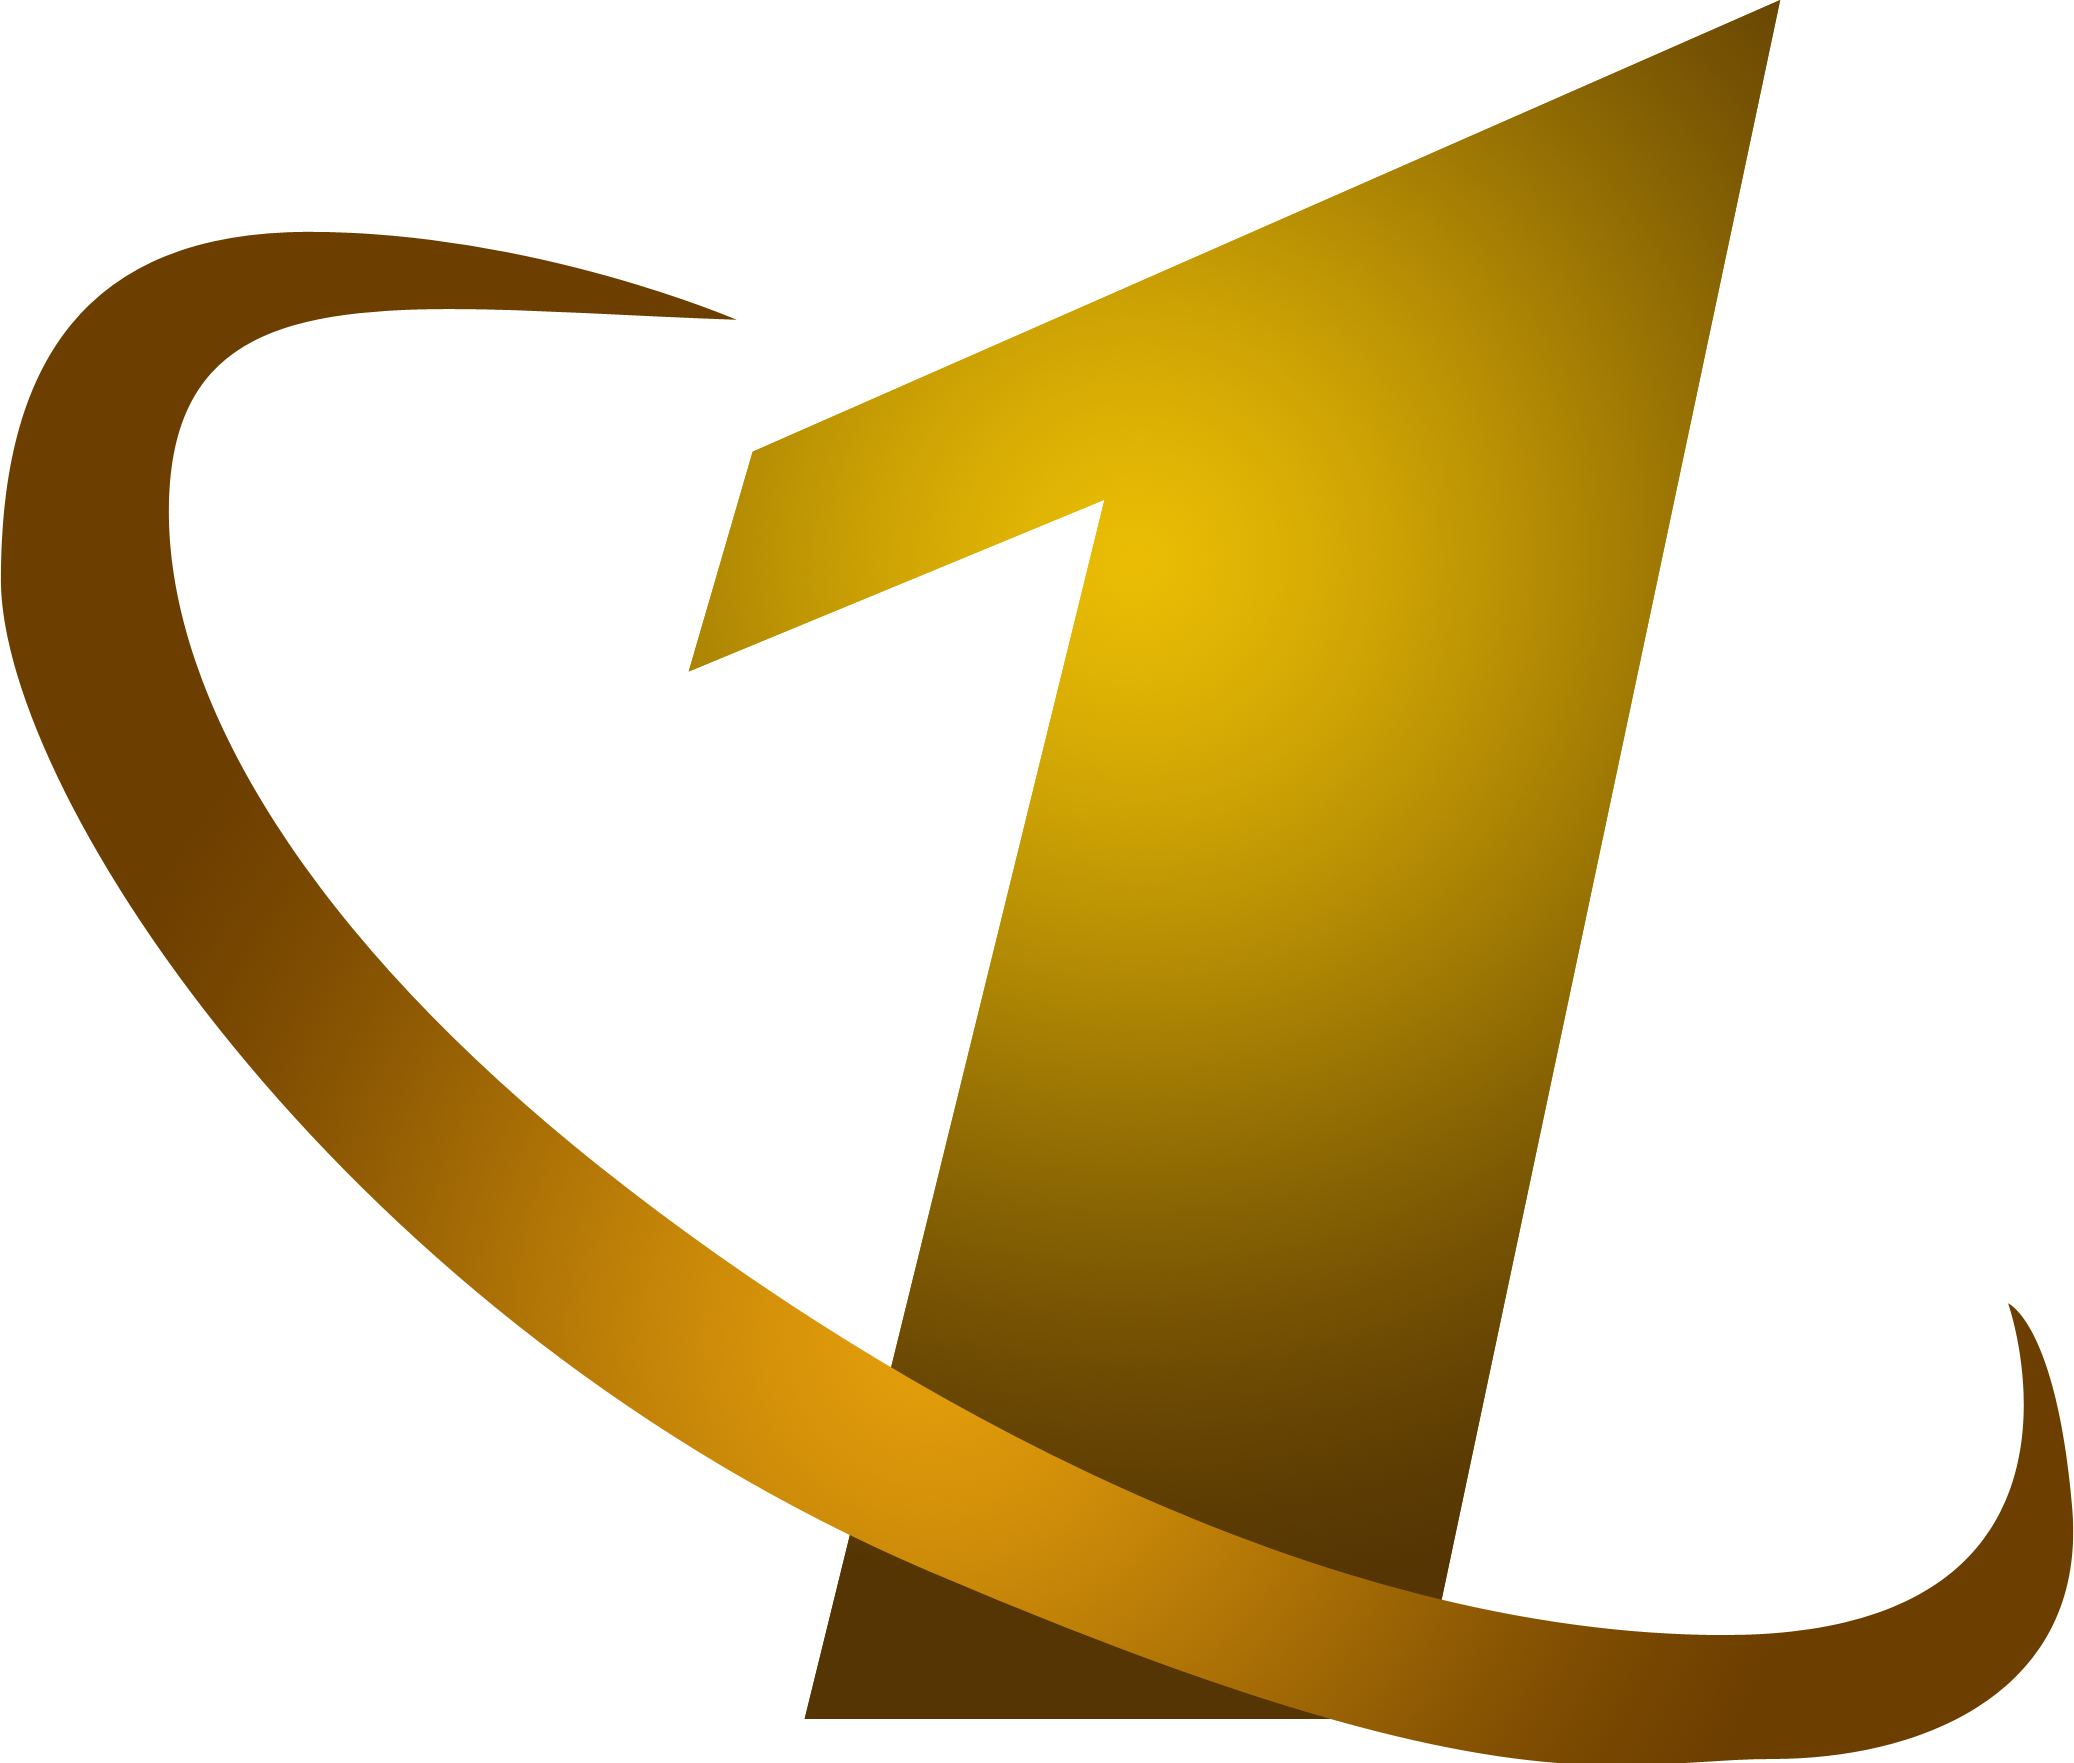 Включи телеканал золотая. ОРТ логотип 1997-2000. Первый канал логотип 1995. ОРТ 1997 логотип. Эмблема канала ОРТ.